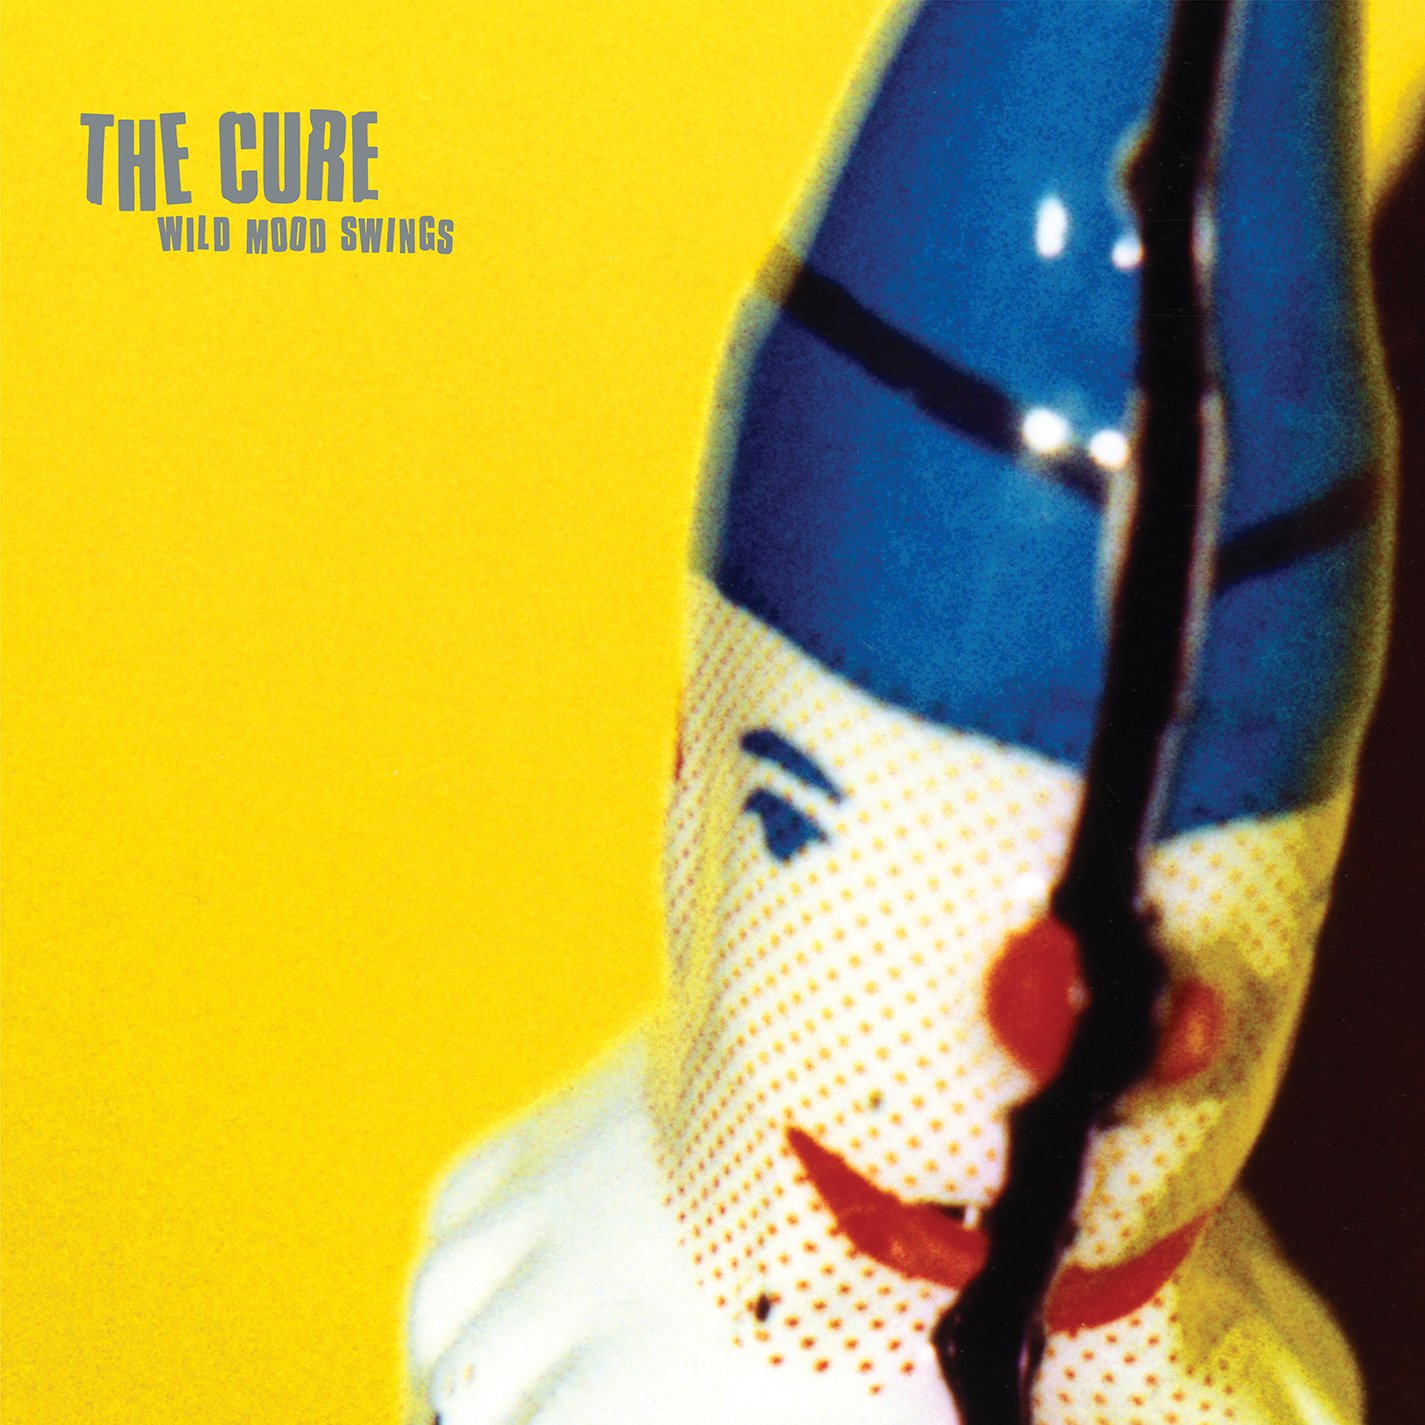 The Cure - Wild Mood Swings (Picture Disc) - 602435081175 - LA ROMA RECORDS